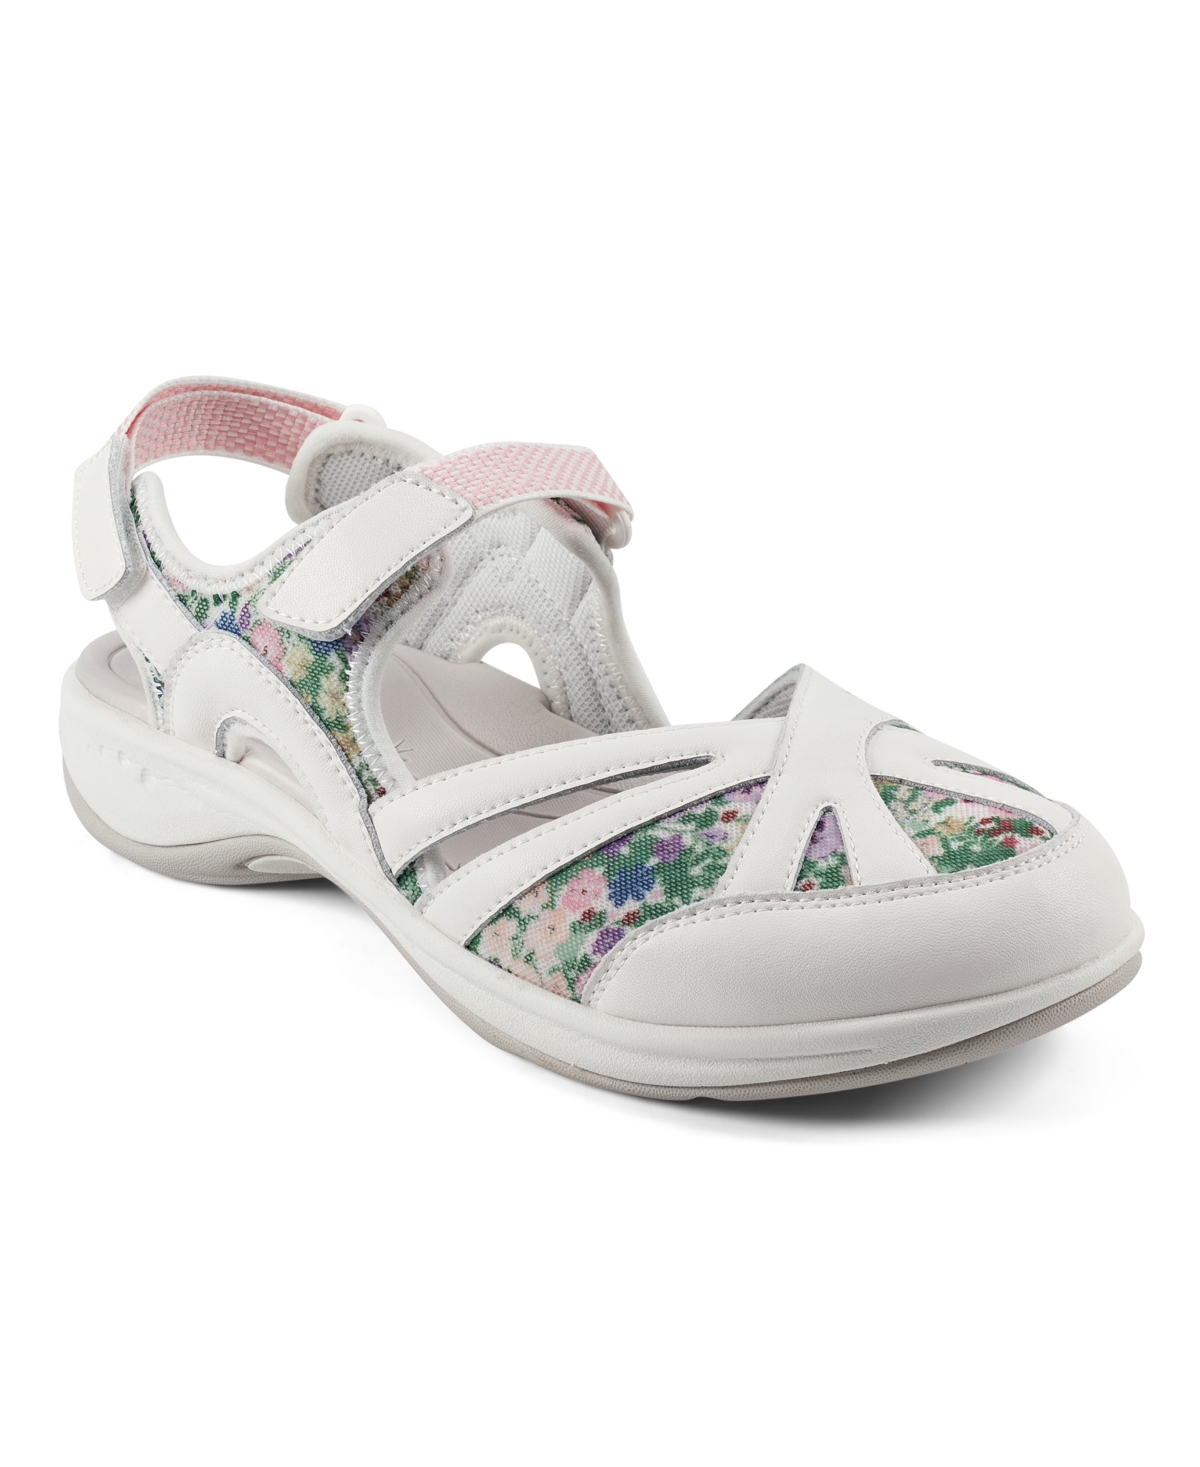 Women's Esplash Closed Toe Sling Back Casual Sandals - White, Pink, Floral Multi